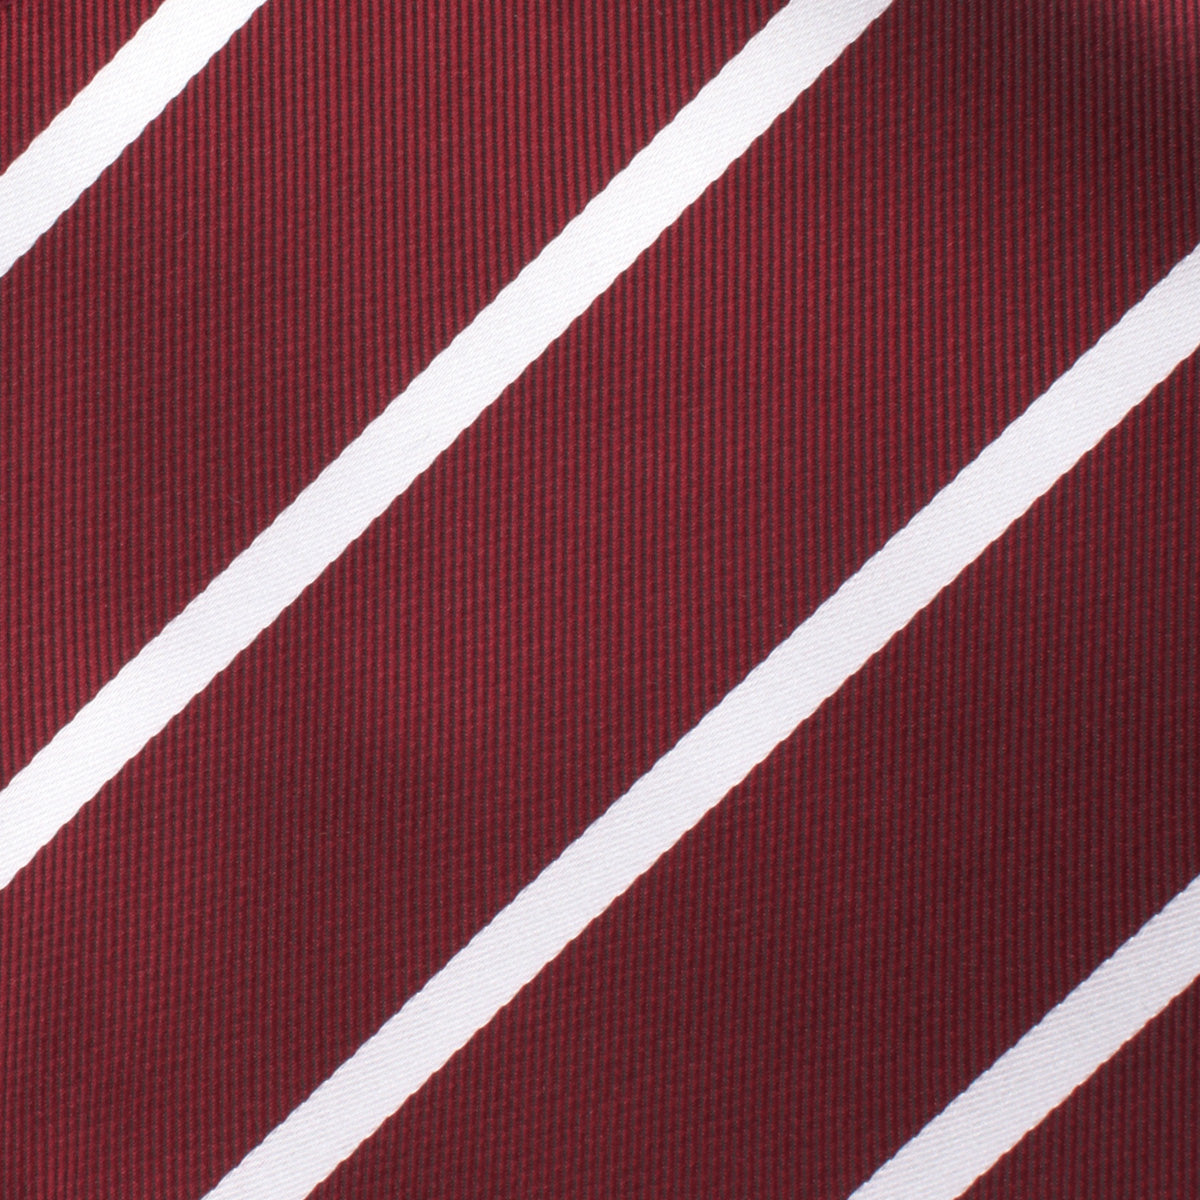 Royal Burgundy Striped Pocket Square Fabric